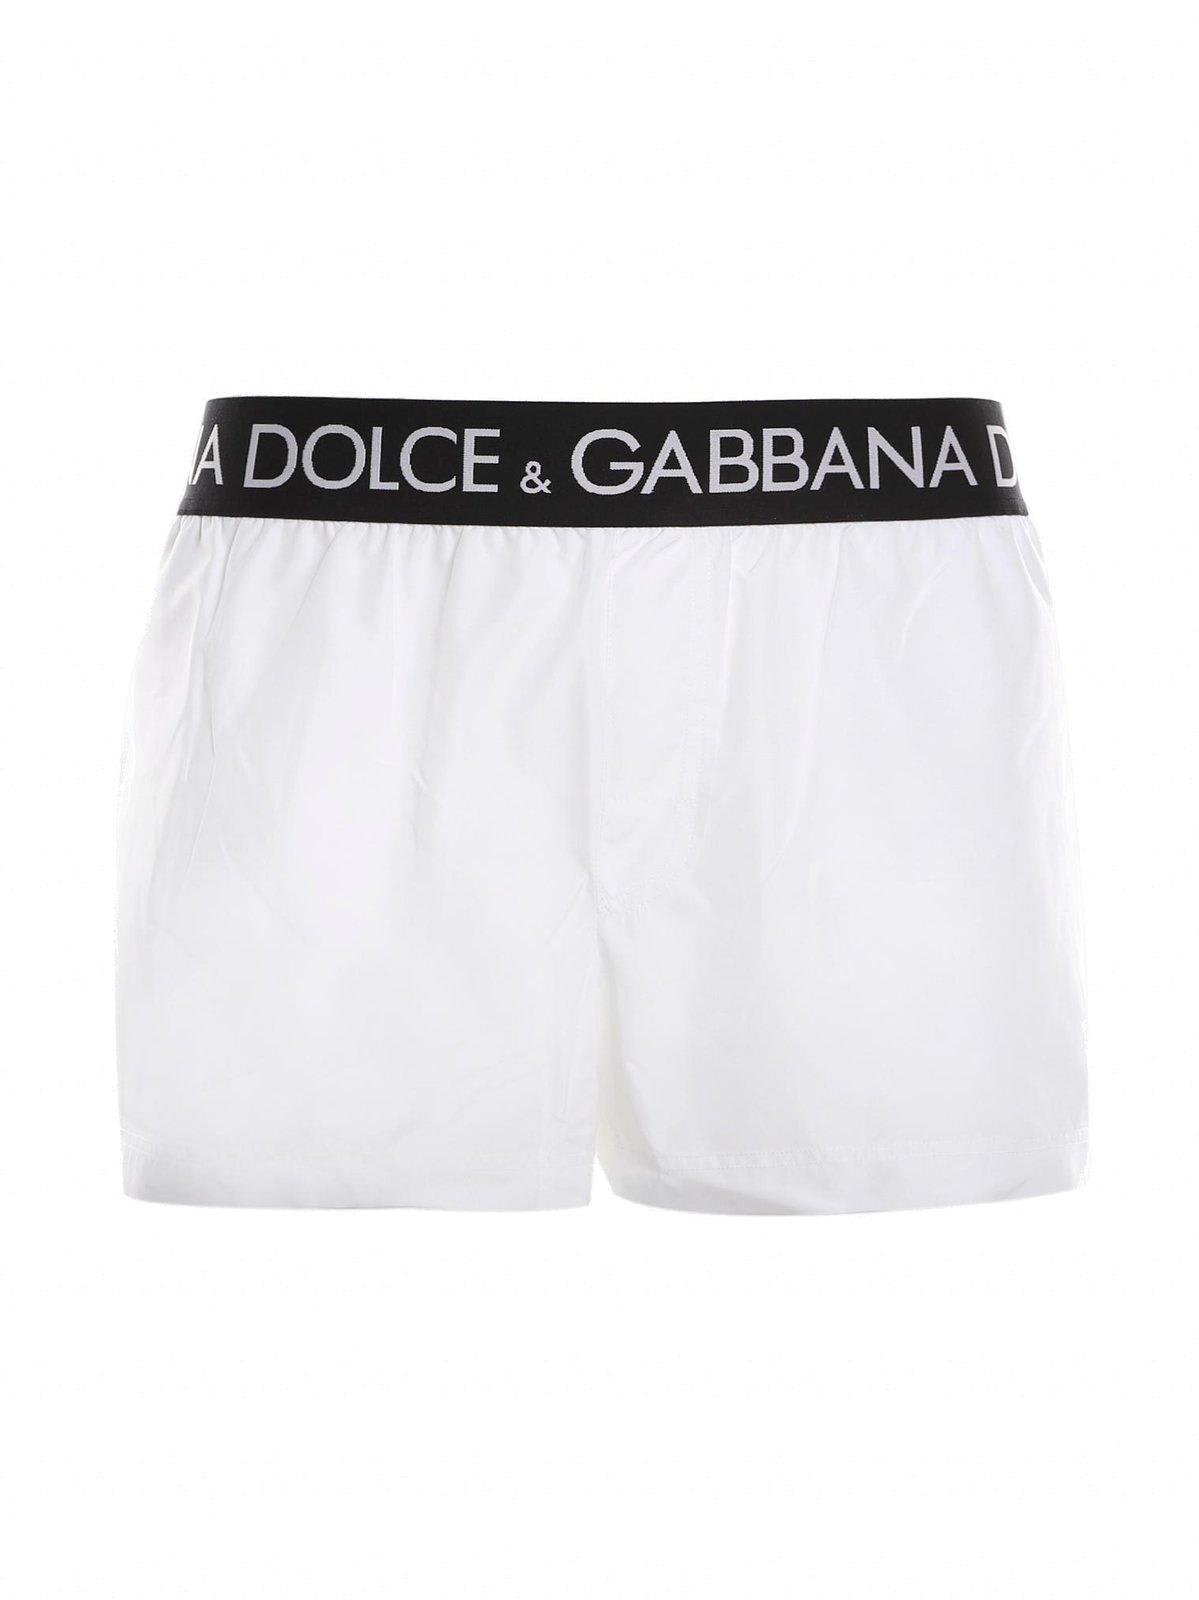 Dolce & Gabbana Branded Swim Trunks